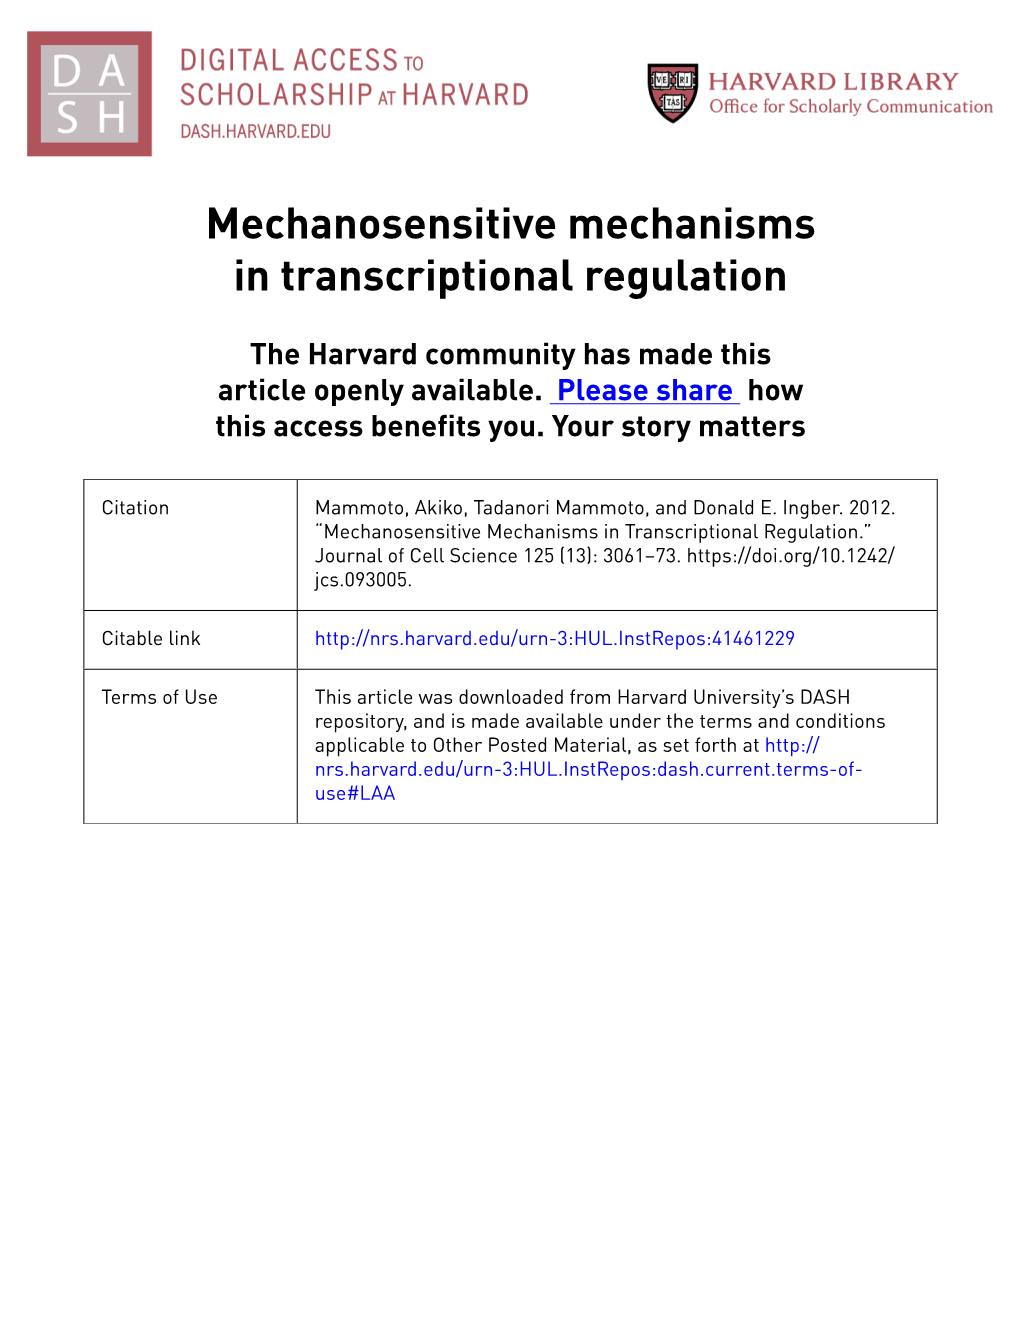 Mechanosensitive Mechanisms in Transcriptional Regulation